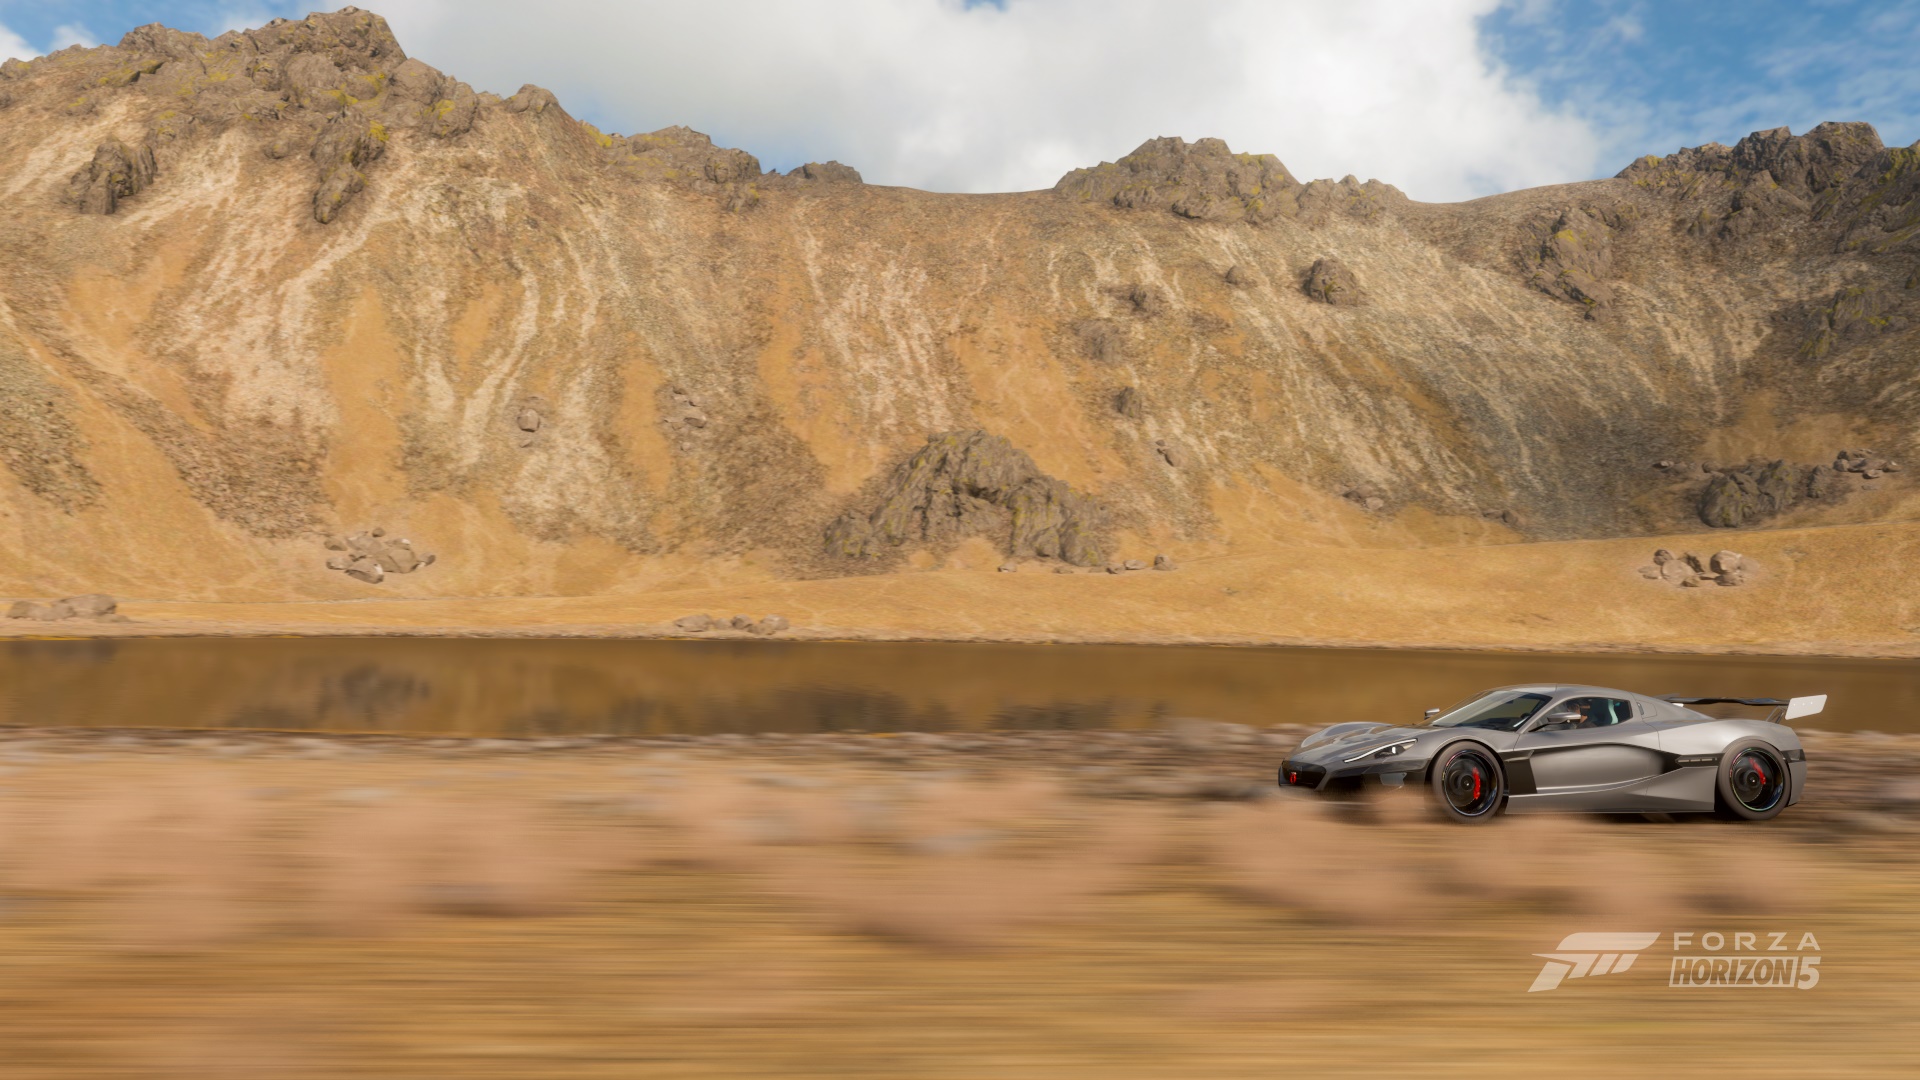 General 1920x1080 Forza Horizon 5 car Rimac Concept Two screen shot video games